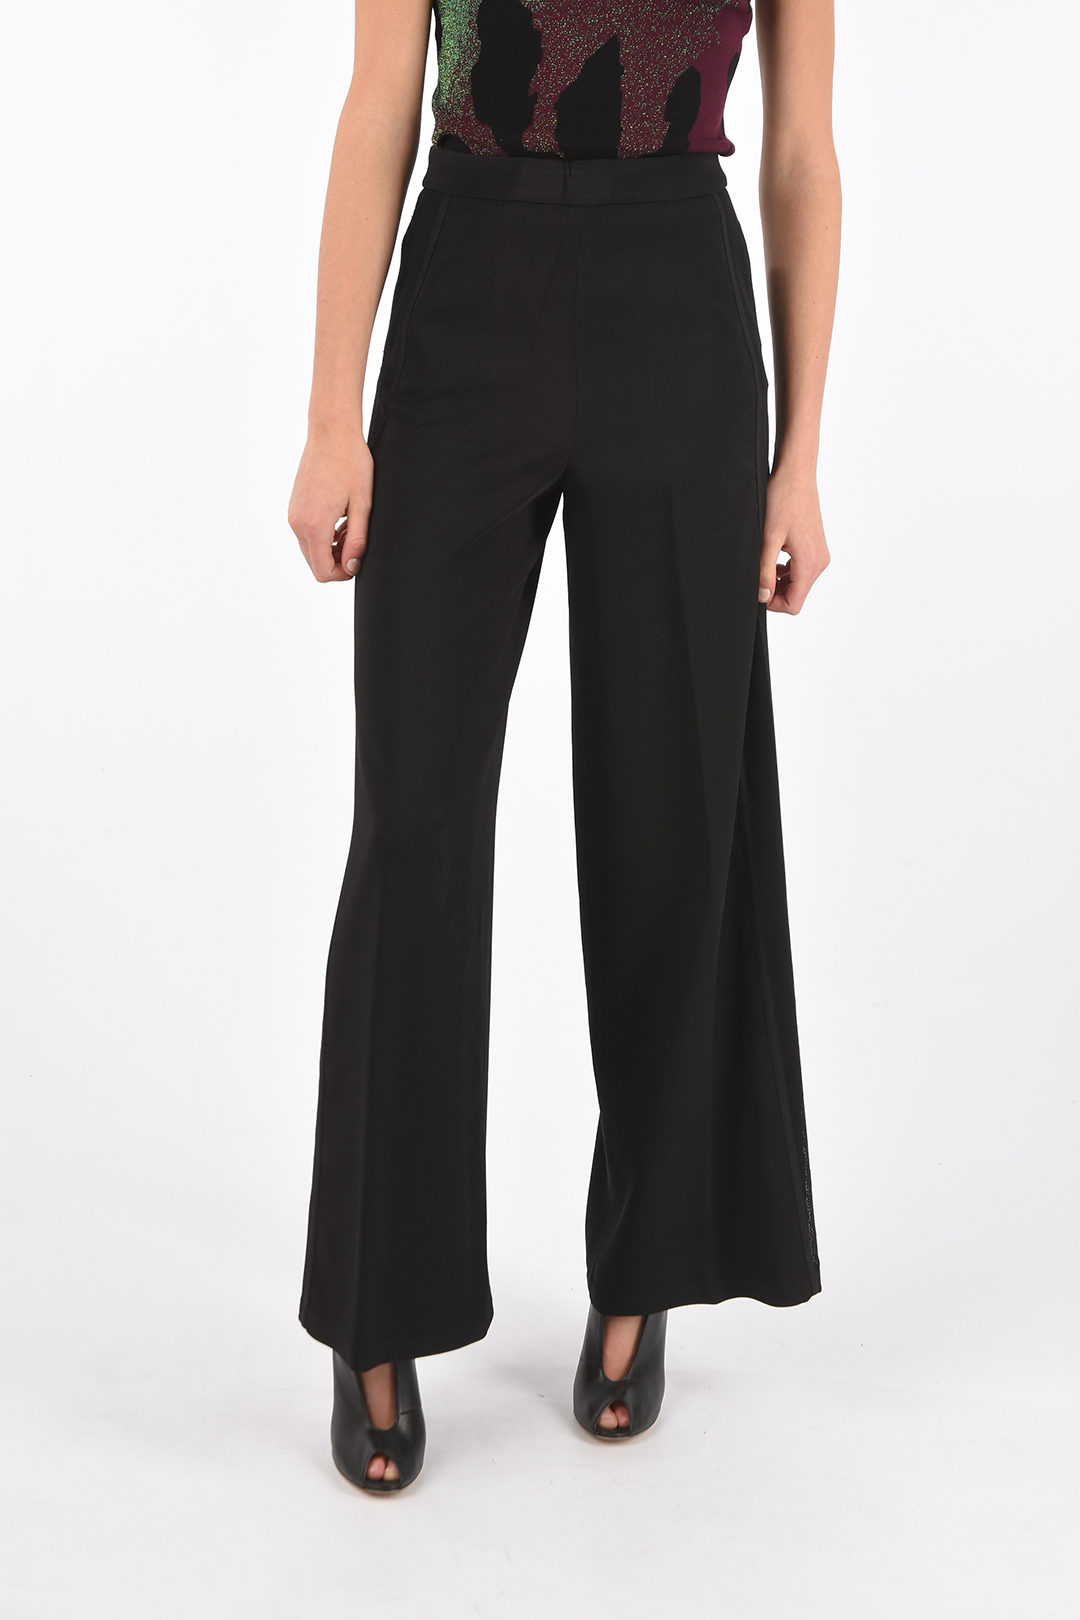 Boys Plain Black Zip/Clip trouser with half back elasticated waist (TF)